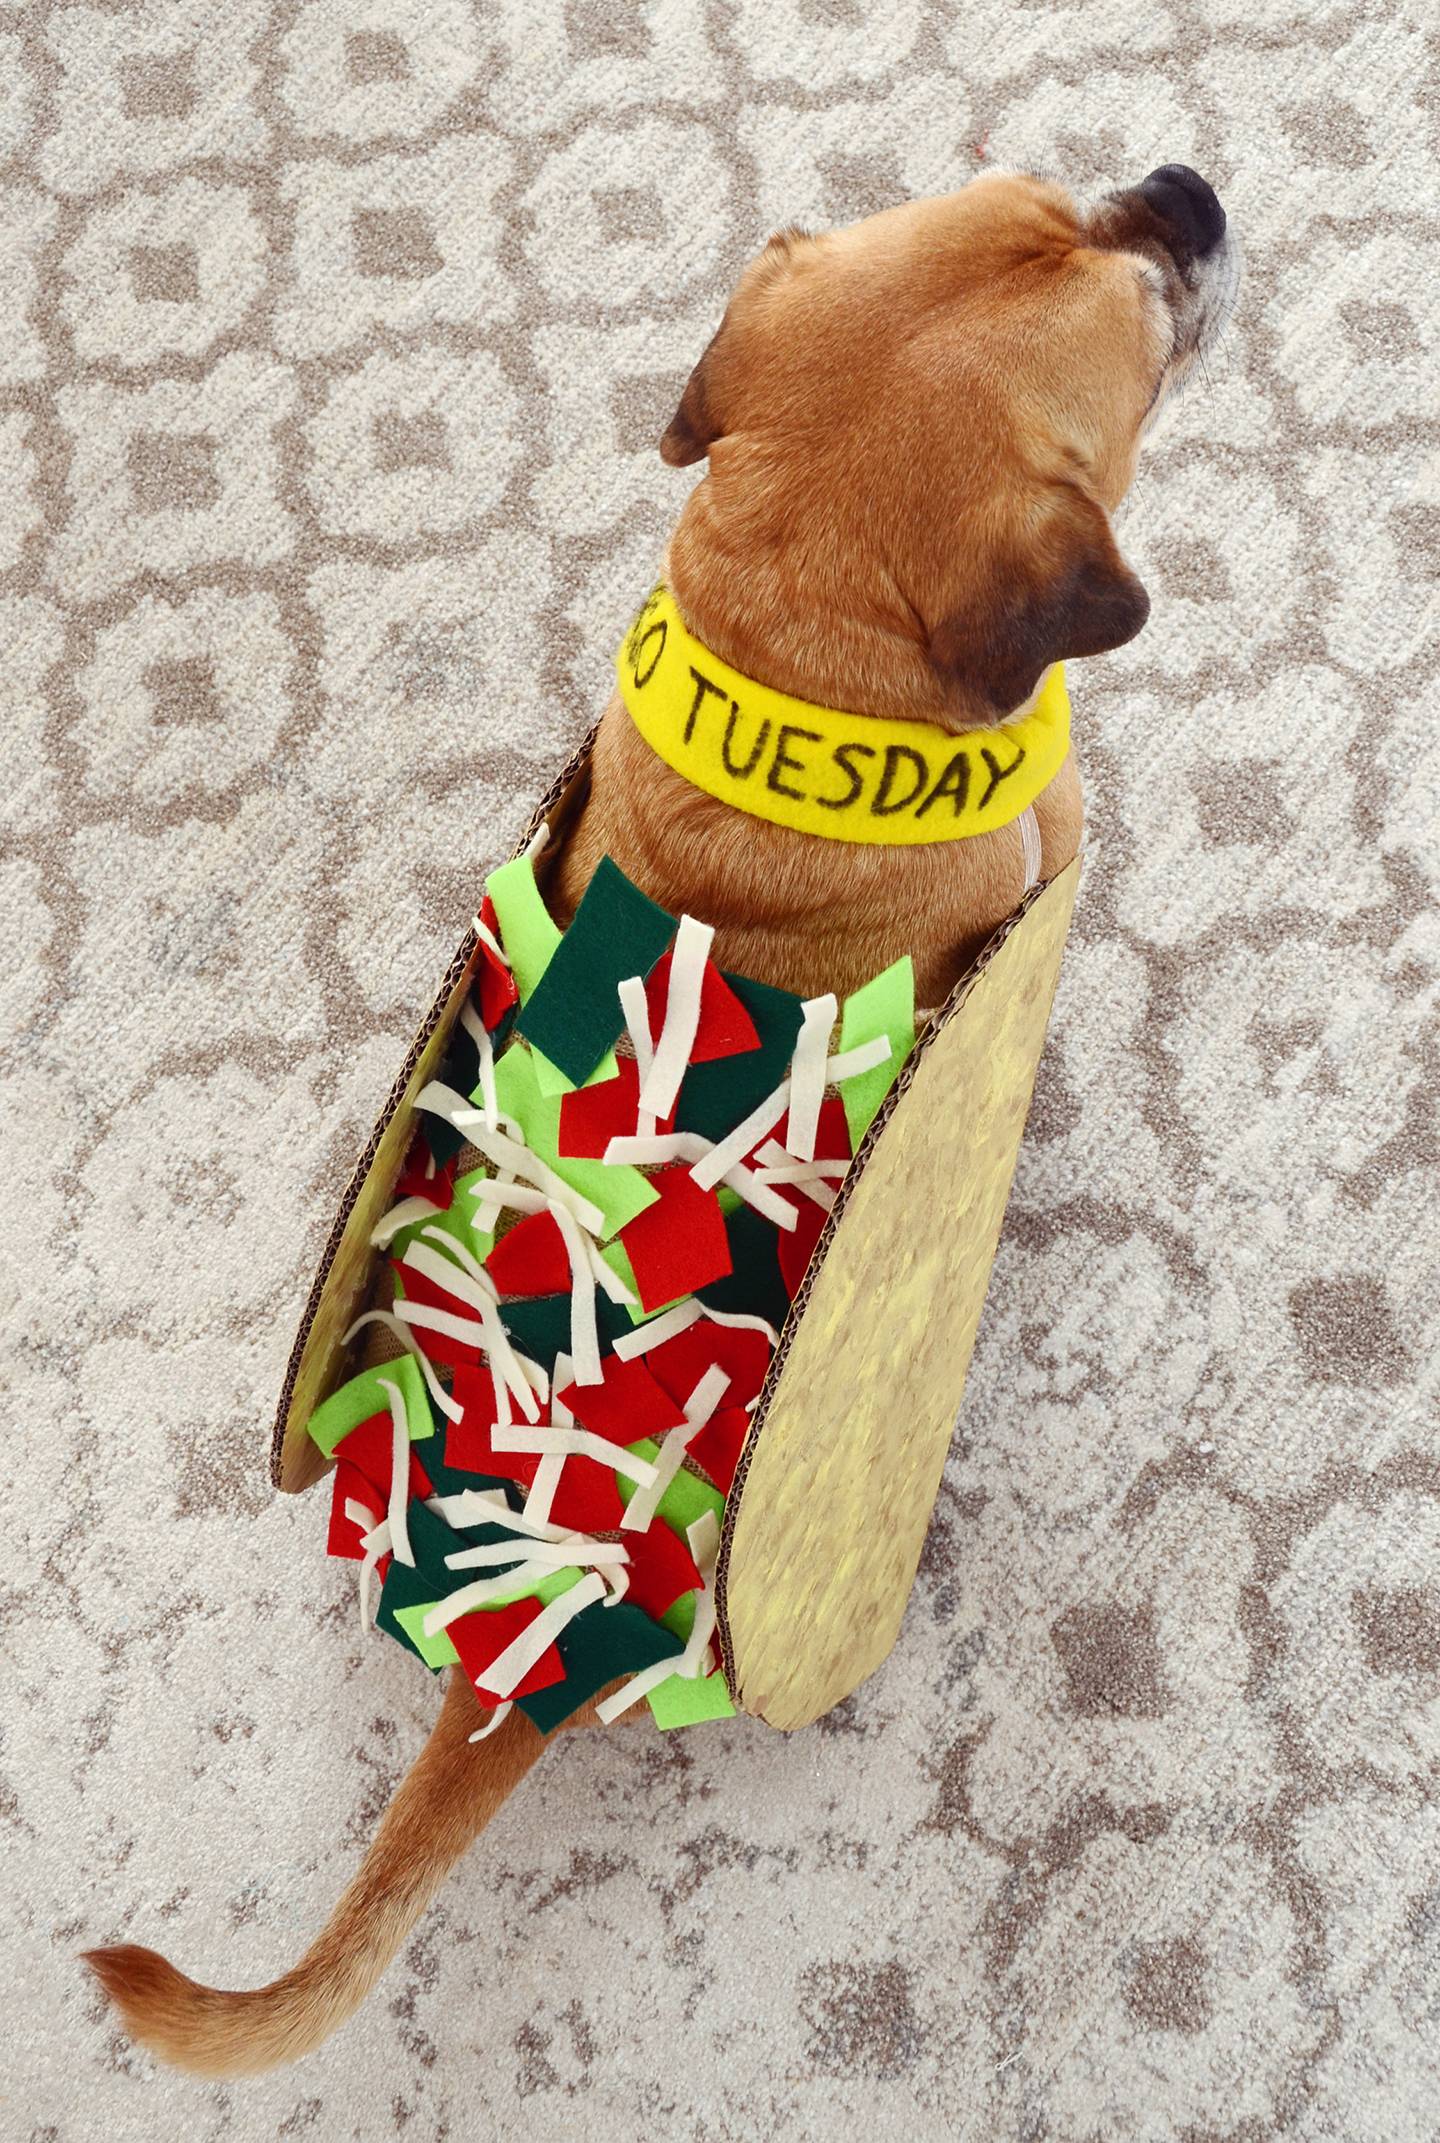 Halloween DIY: Make a Taco Tuesday Dog Costume